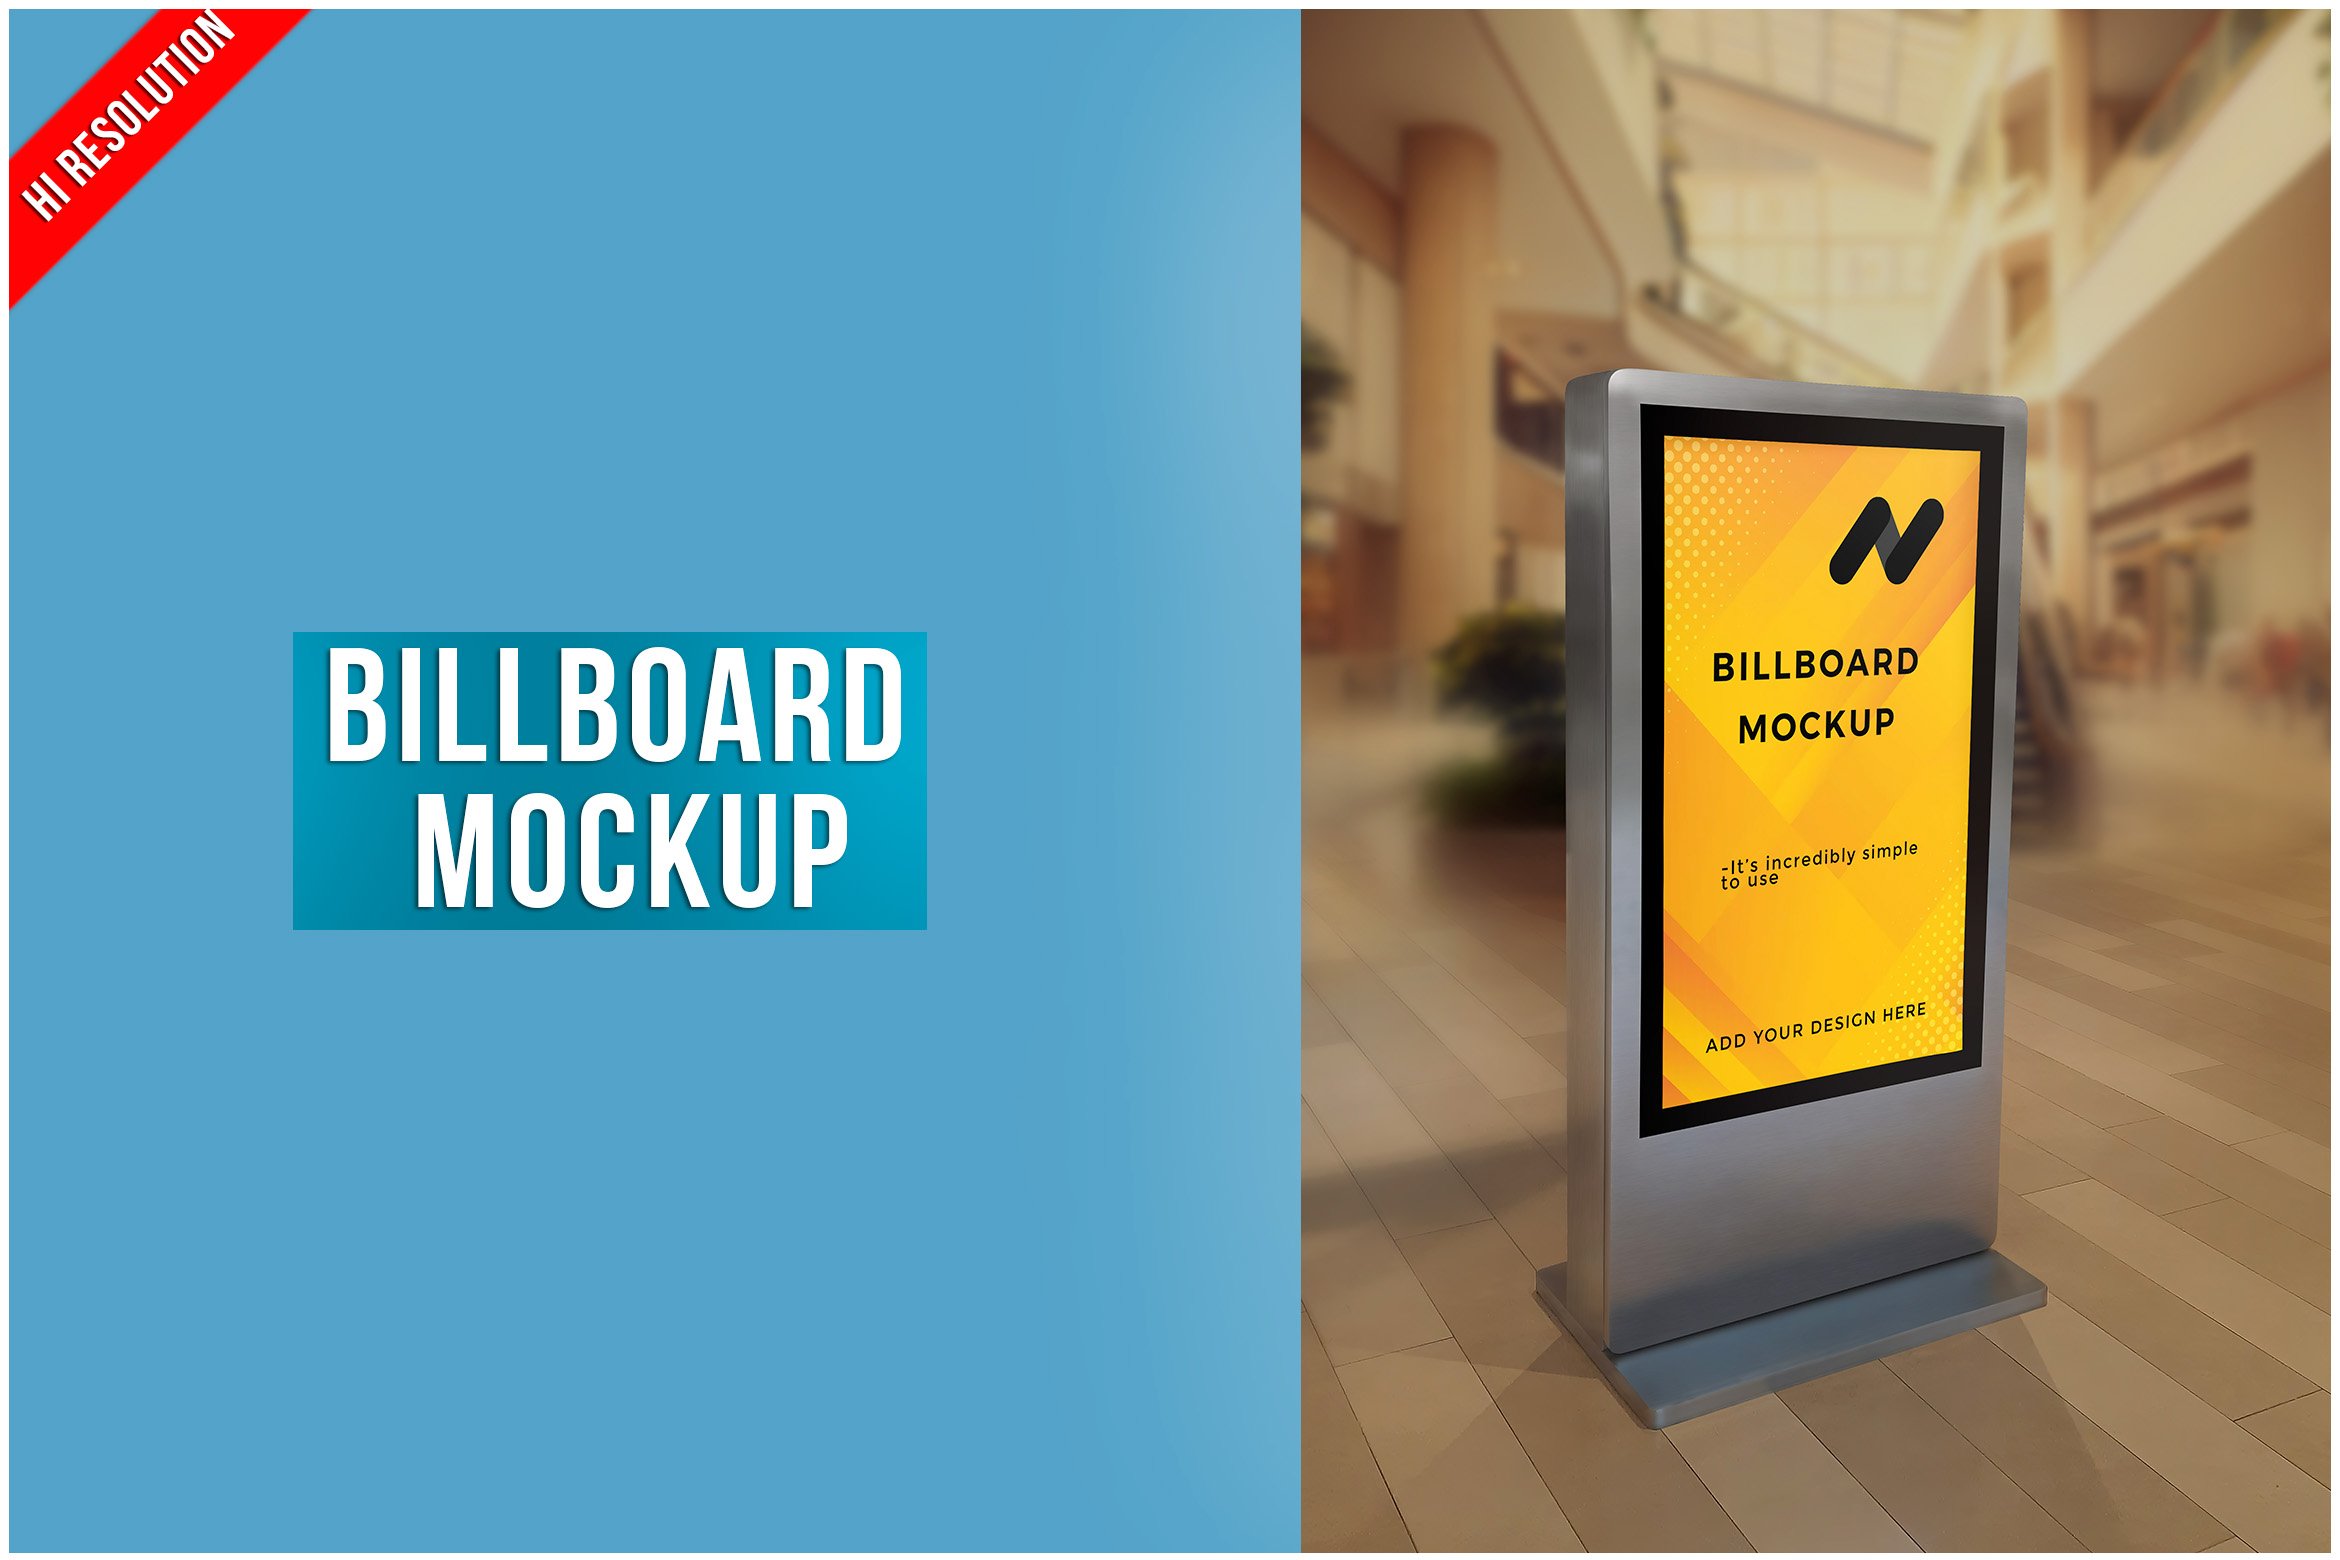 A Digital Display Billboard Mockup cover image.